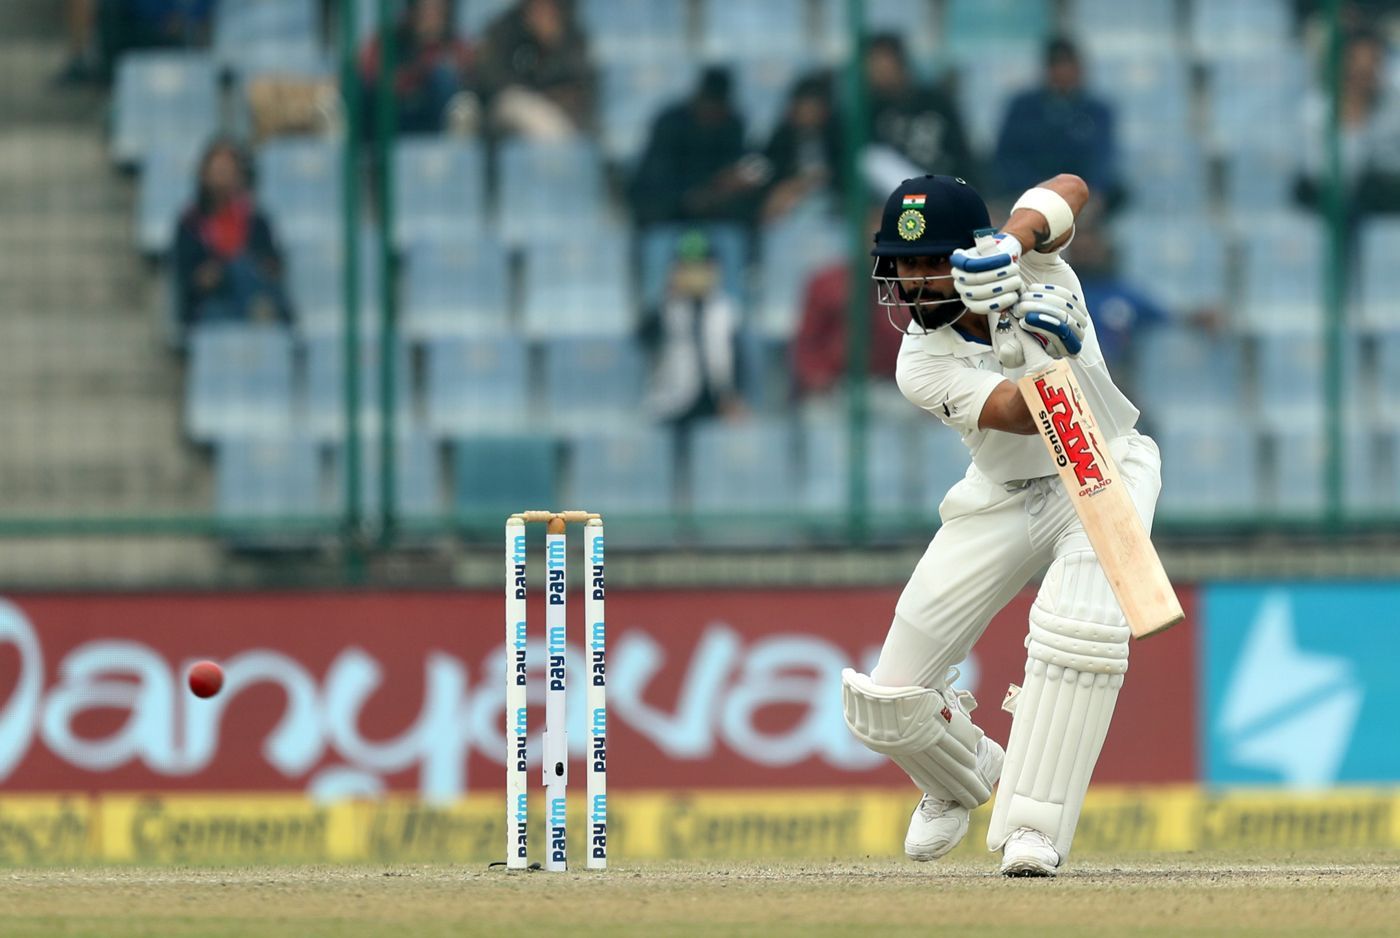 Virat Kohli has a chance to breach the 8000-run mark in Test cricket